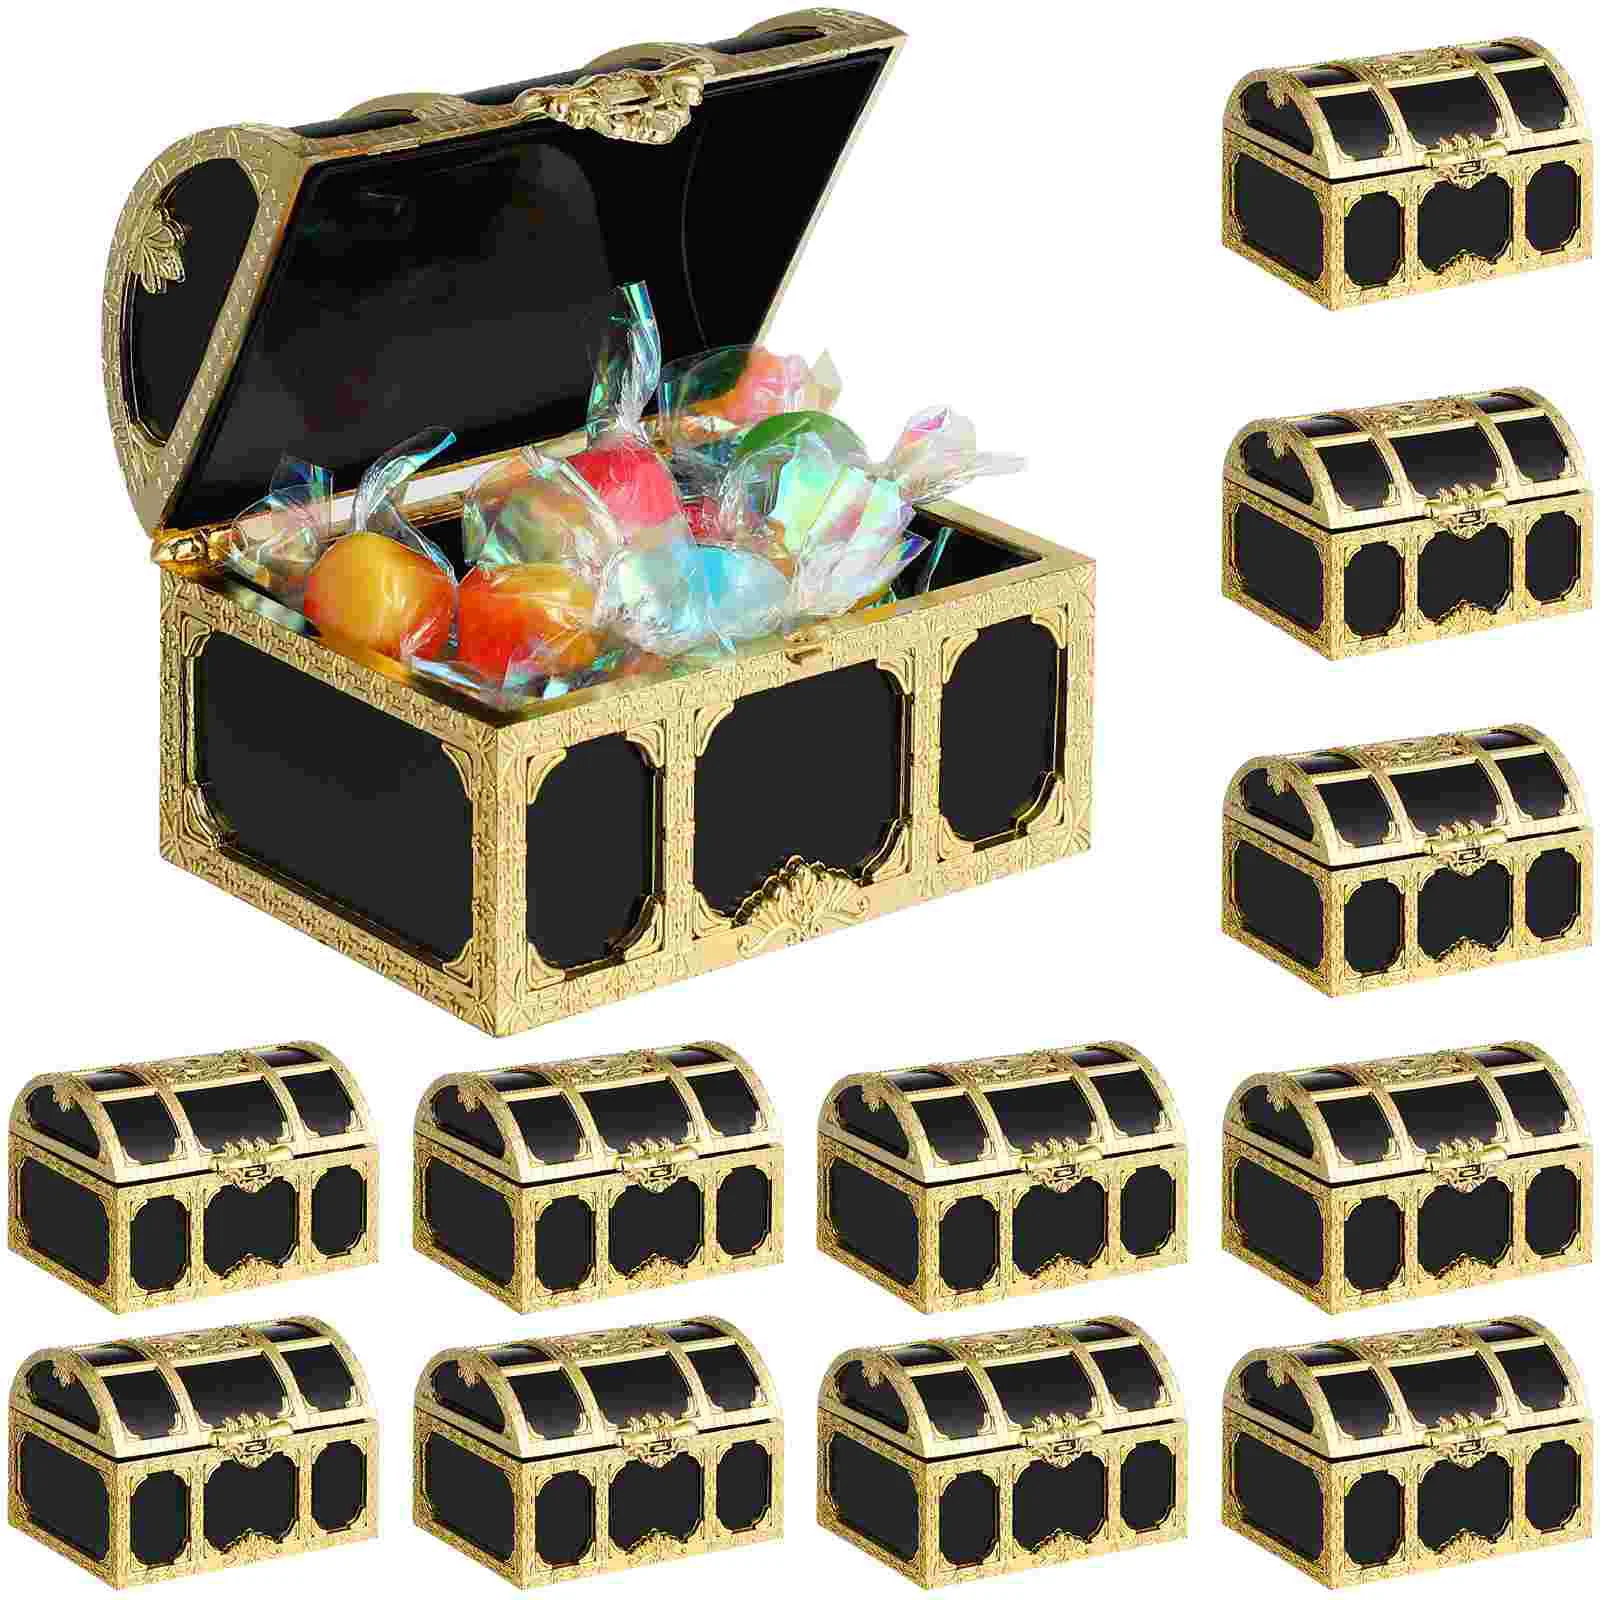 

12 Pcs Treasure Sugar Box Classroom Small Prizes Favor Boxes Wedding Mini Holder Kids Child Pirate Toy